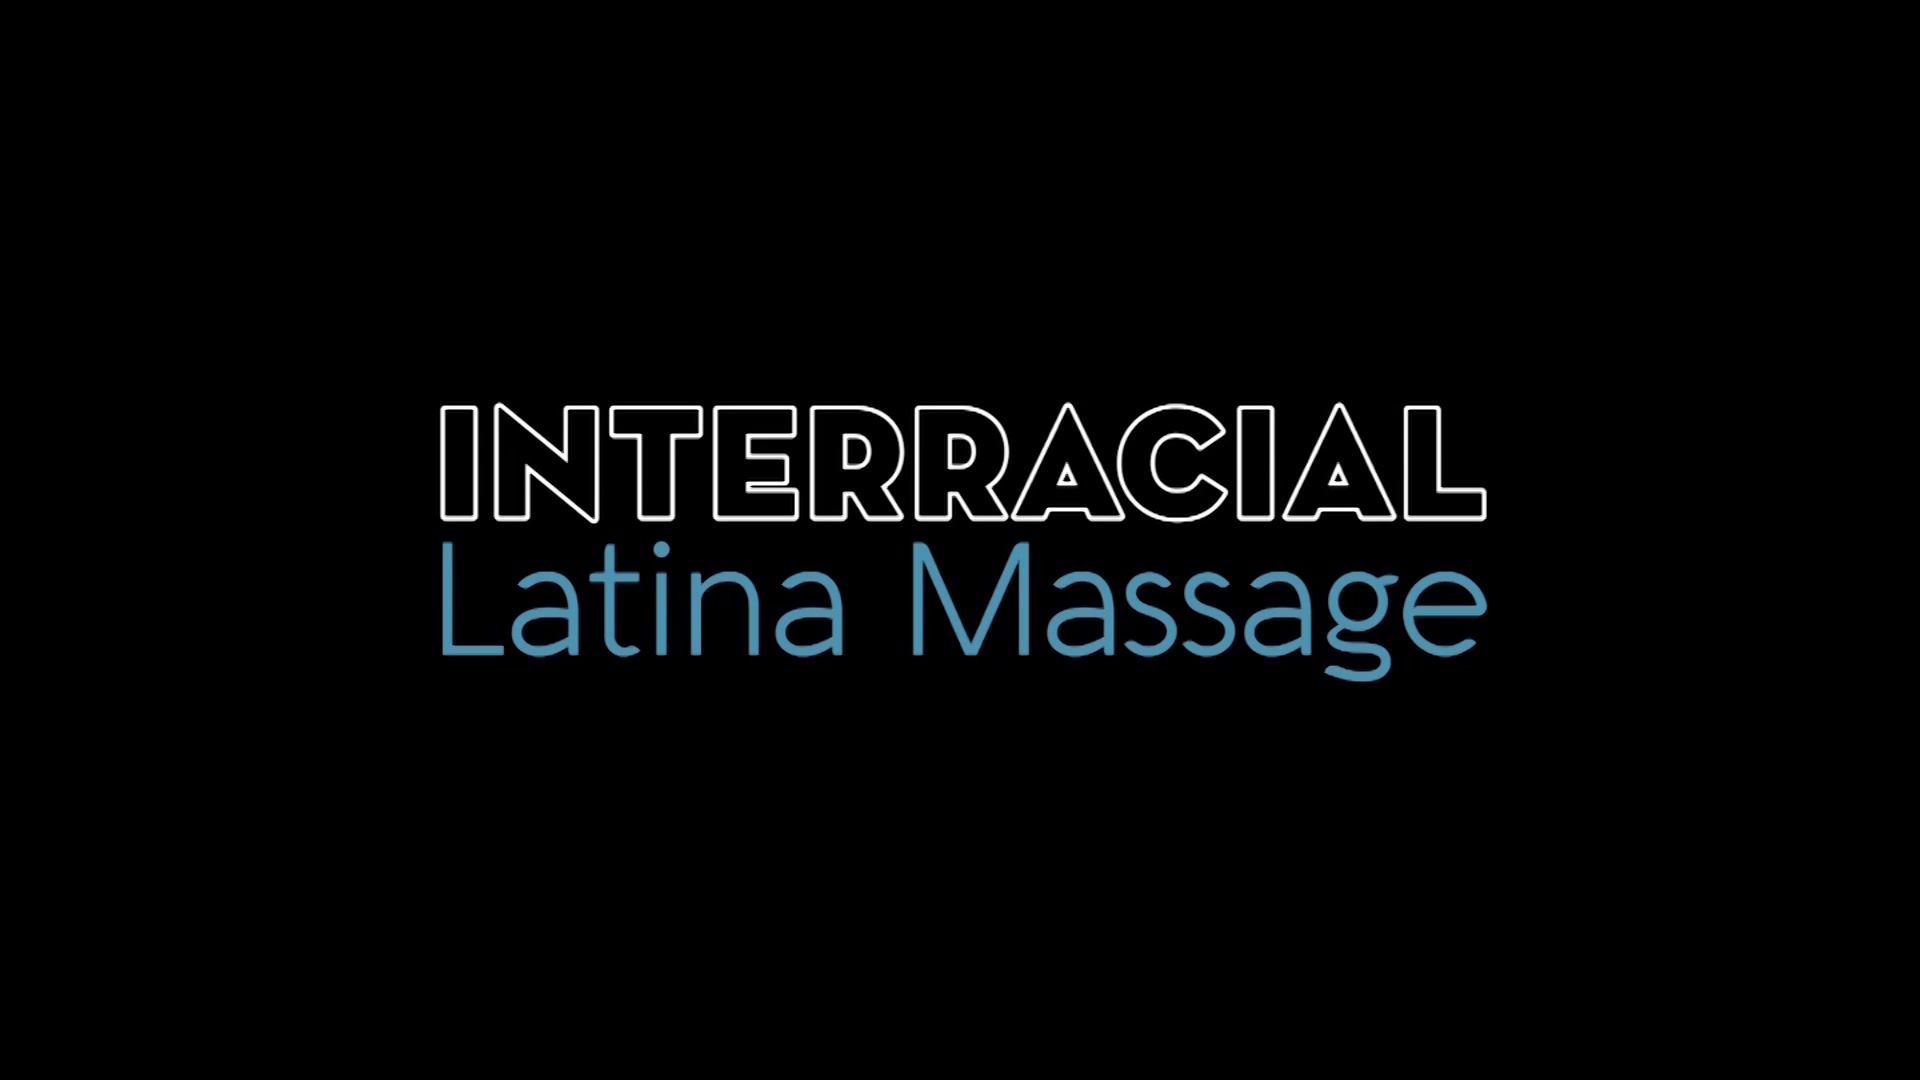 Interracial Latina Massage - Kinky Spa DVD